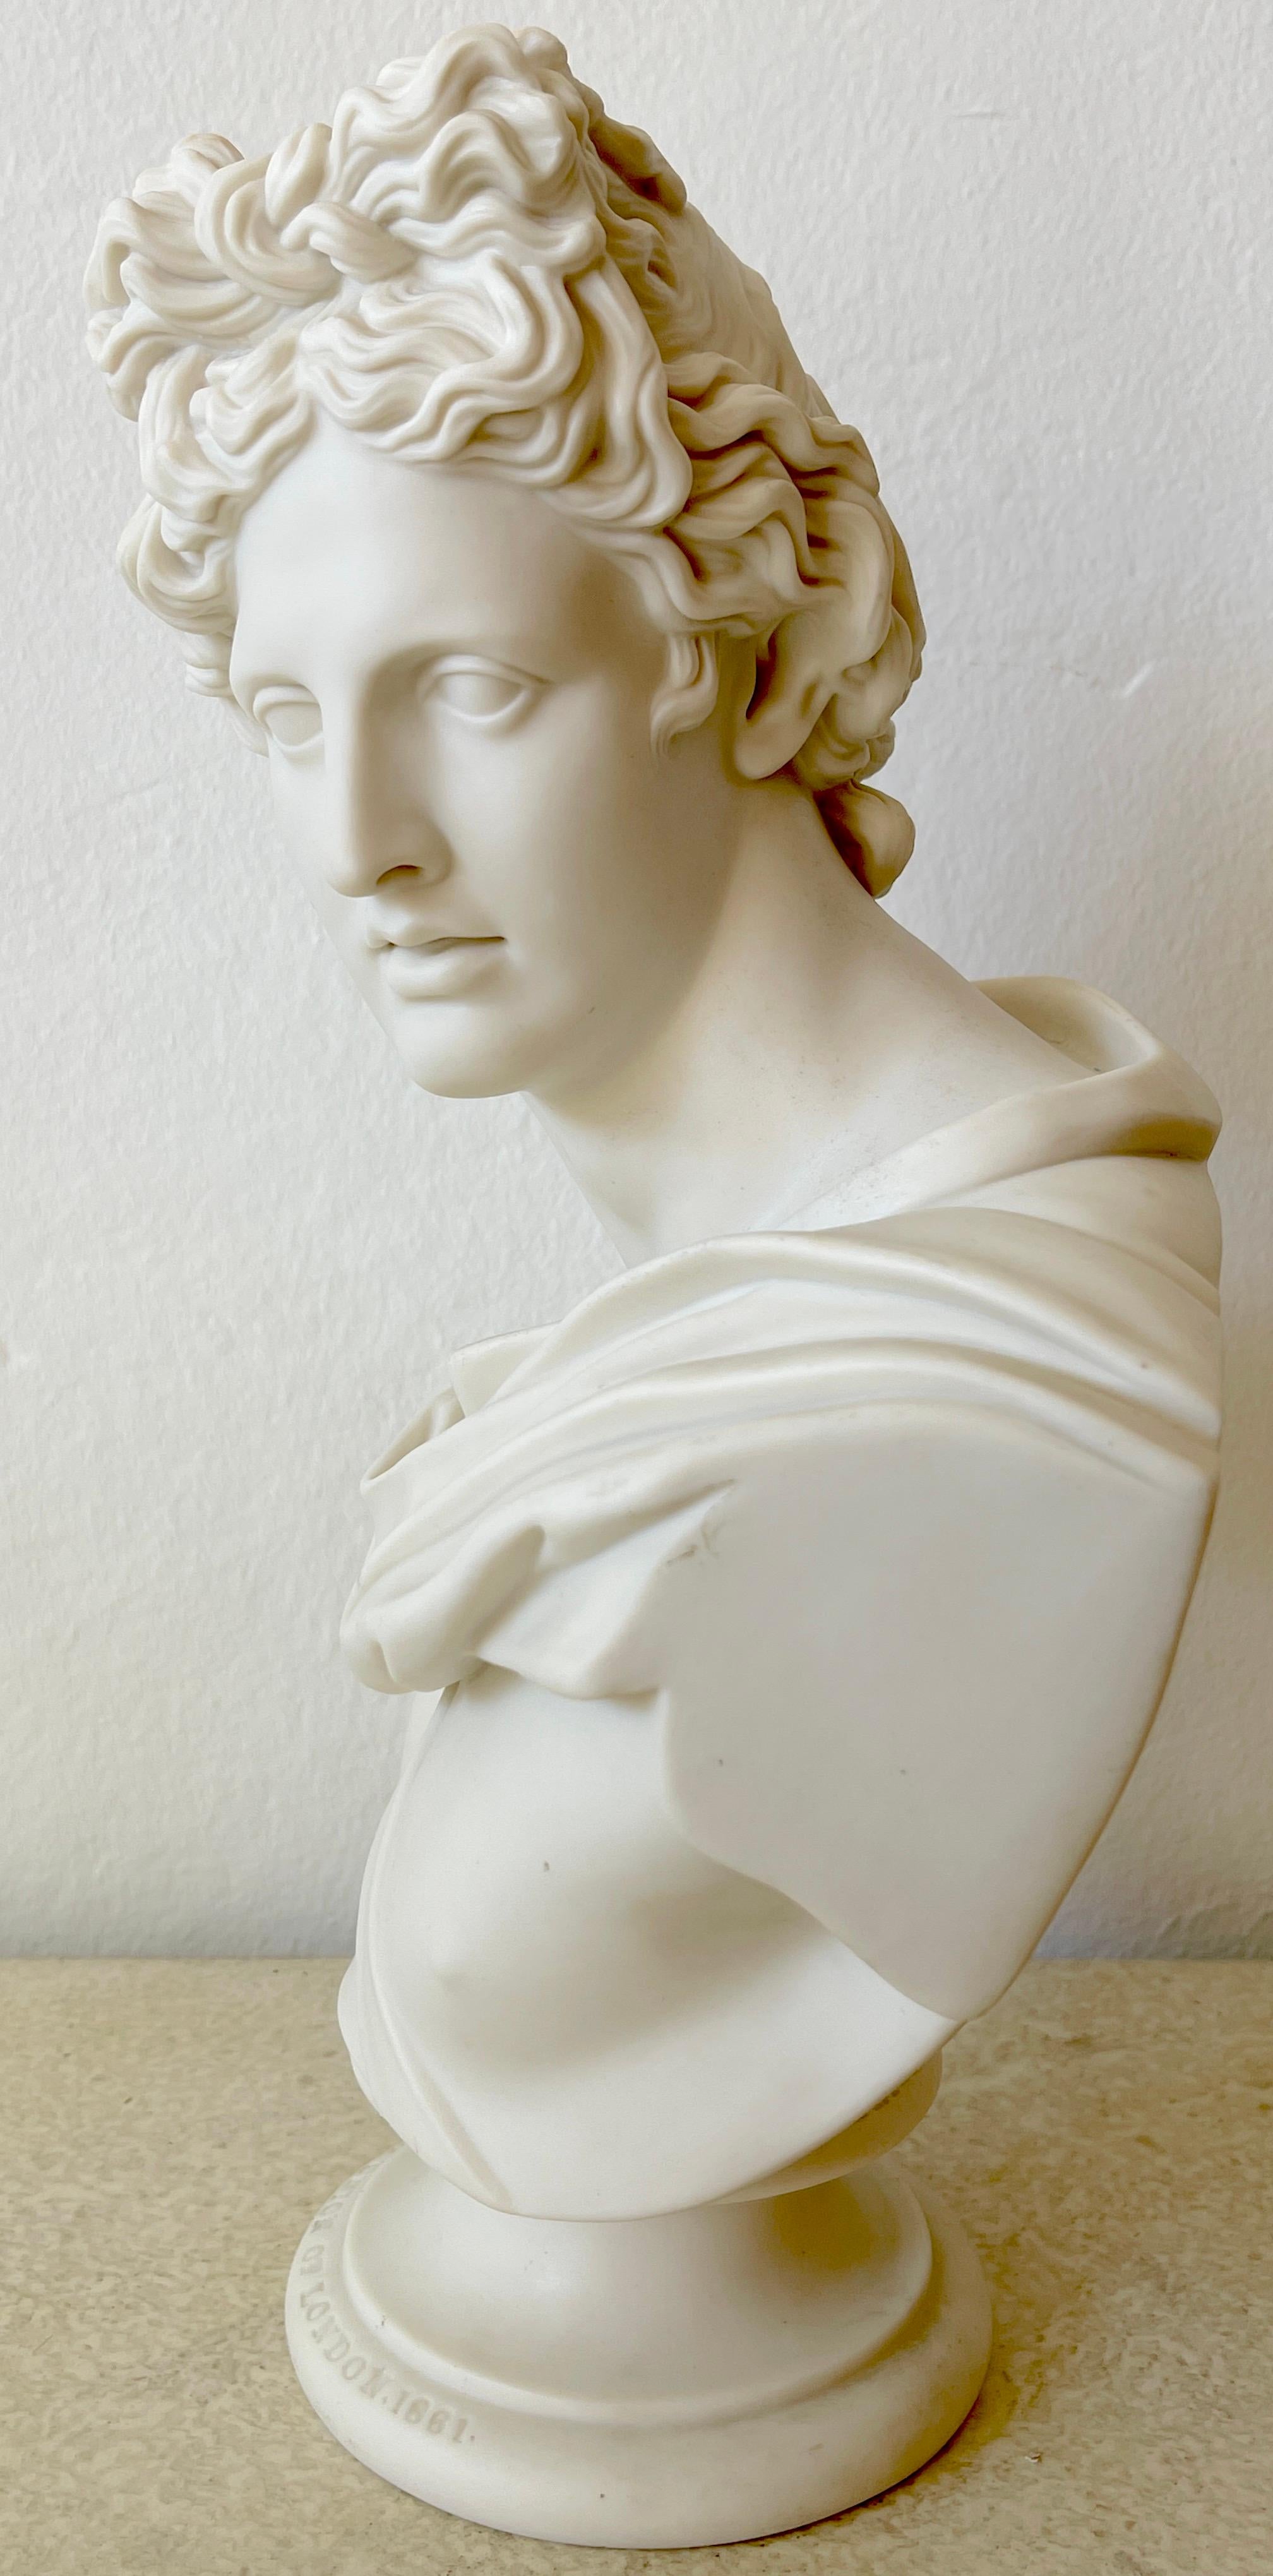 Art Union of London Parian Bust of Apollo Belvedere, by C. Delpech, 1861 6